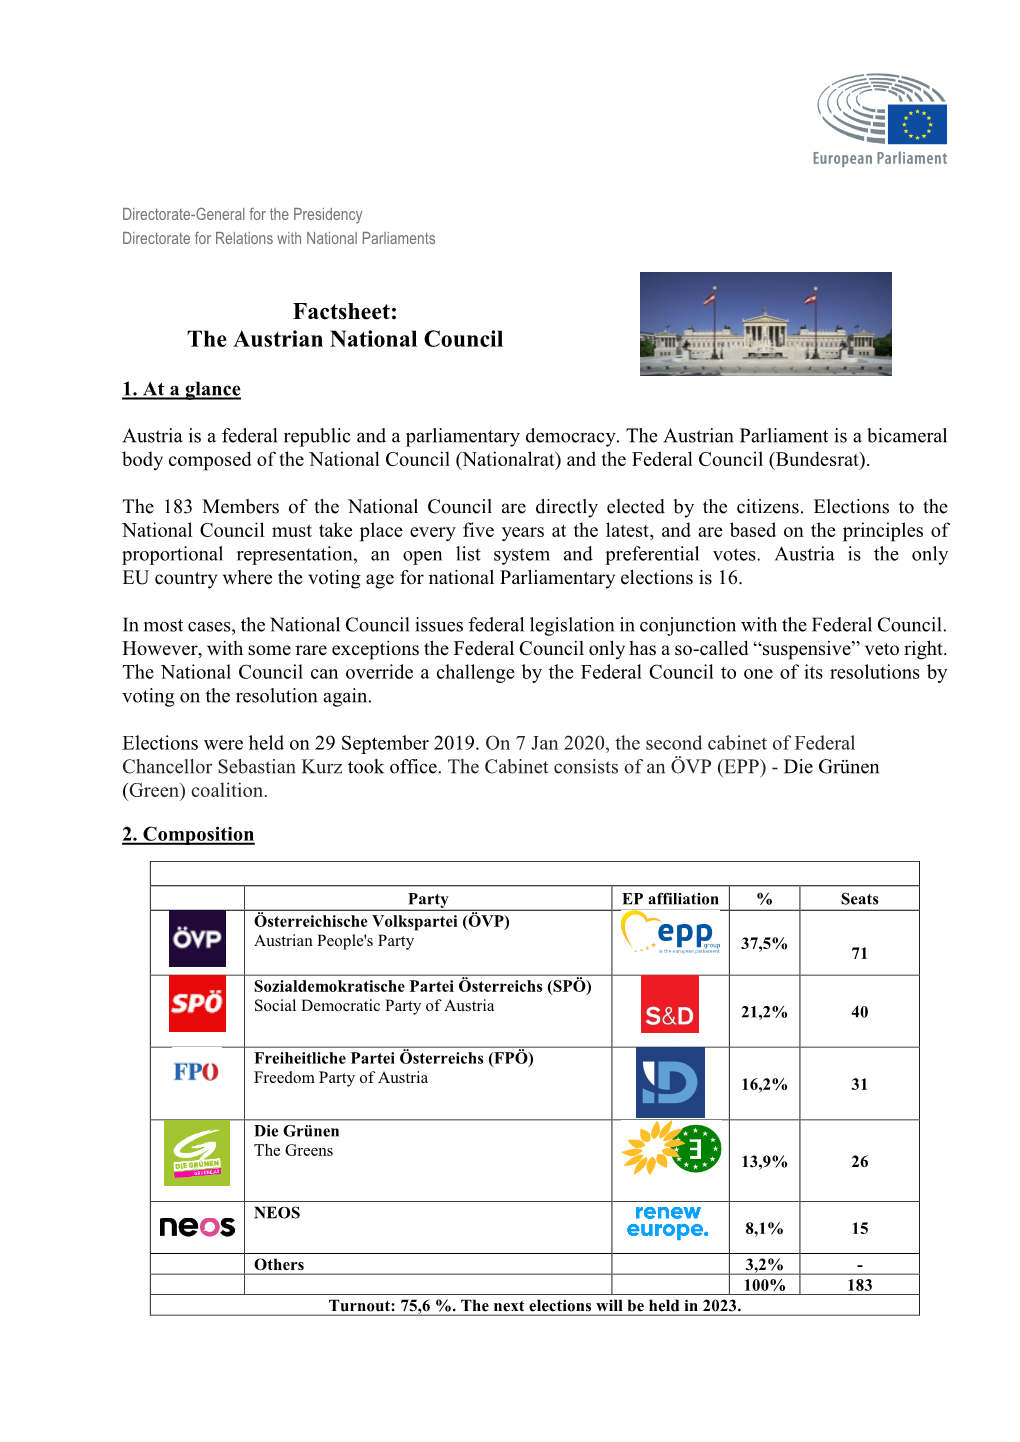 Factsheet: the Austrian National Council